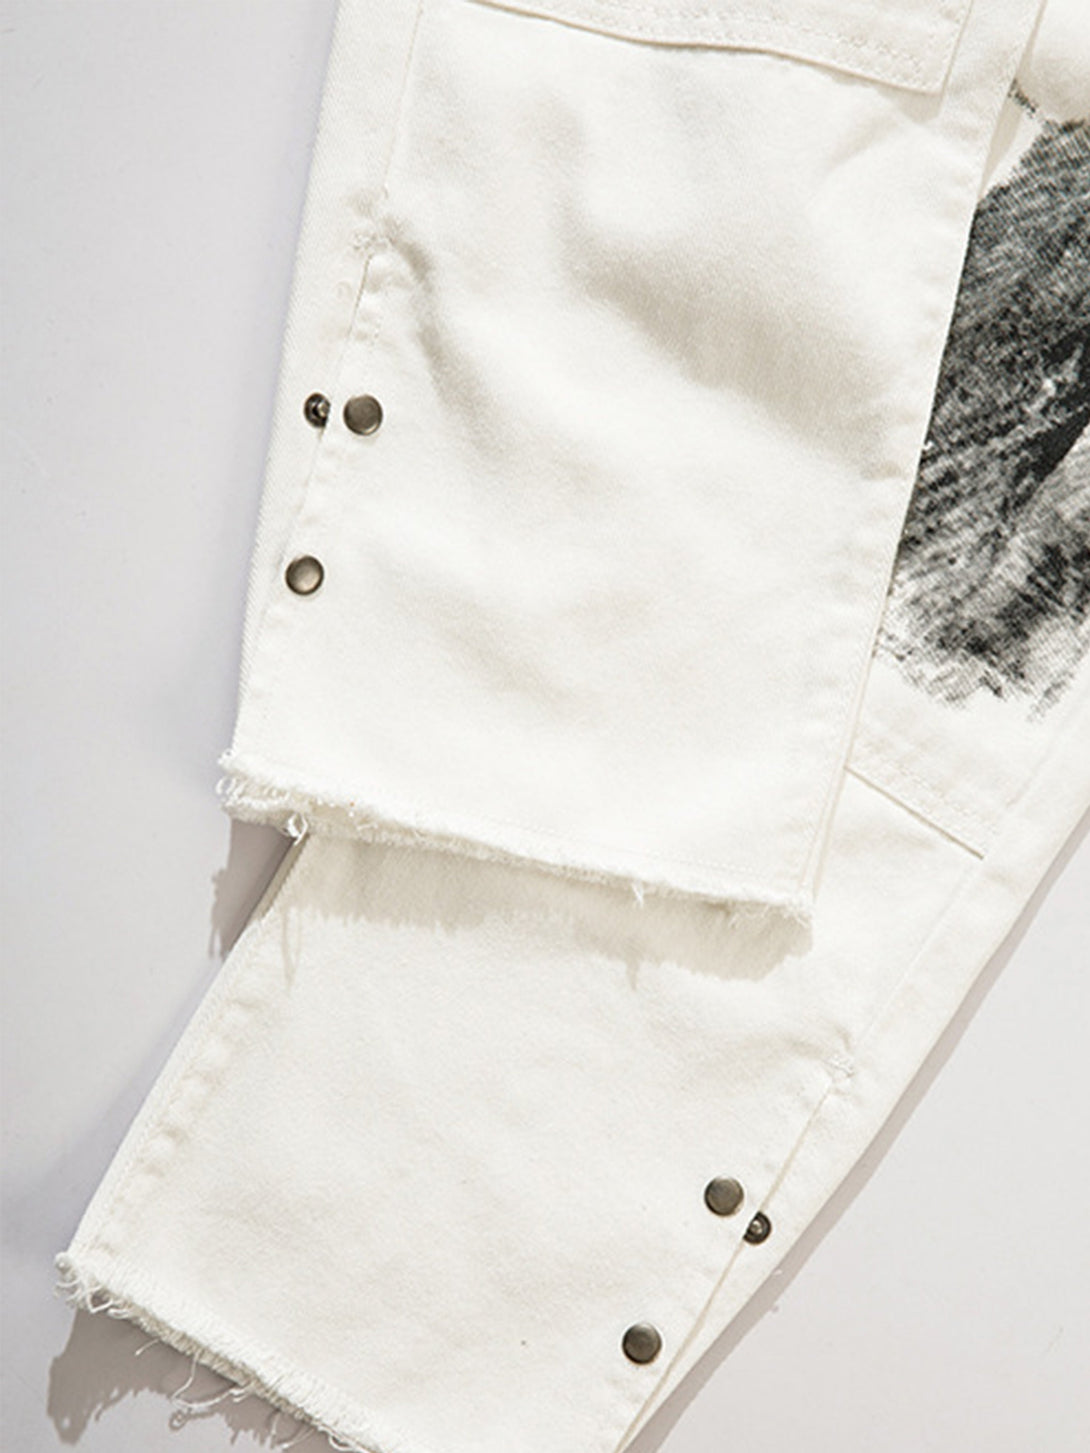 Majesda® - Graffiti Print White Straight Jeans -1184- Outfit Ideas - Streetwear Fashion - majesda.com